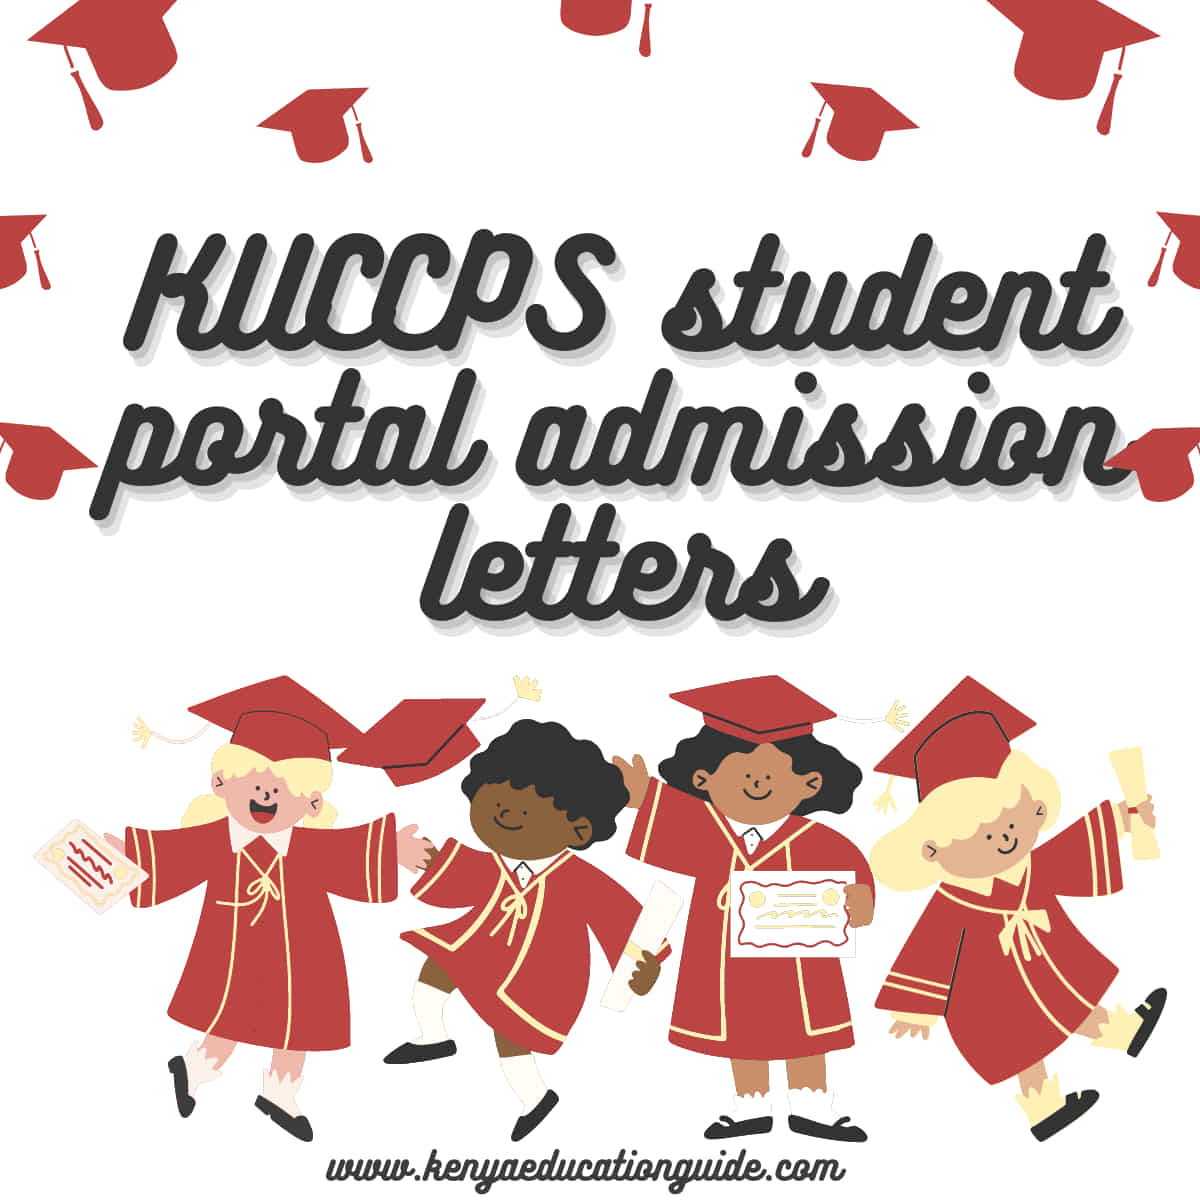 KUCCPS student portal admission letters